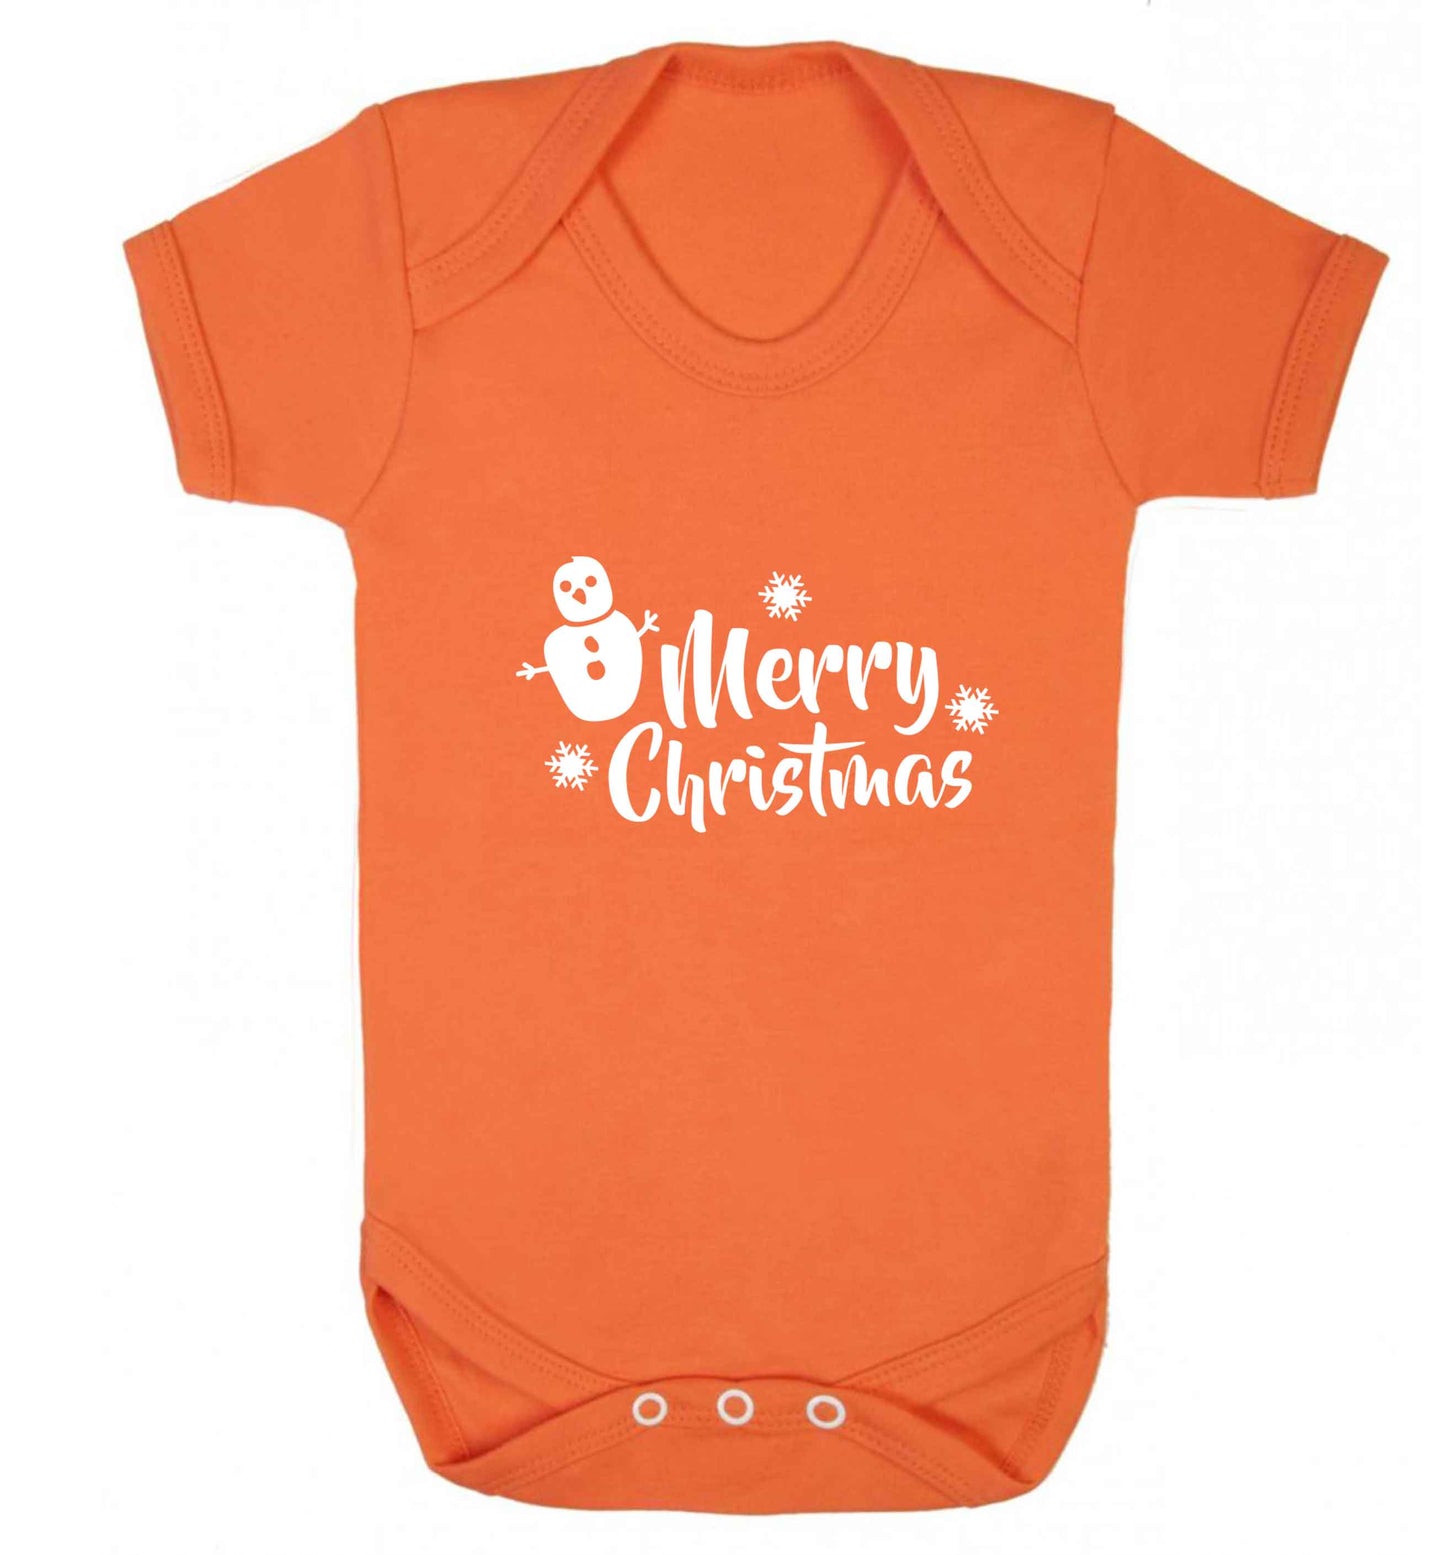 Merry Christmas - snowman baby vest orange 18-24 months